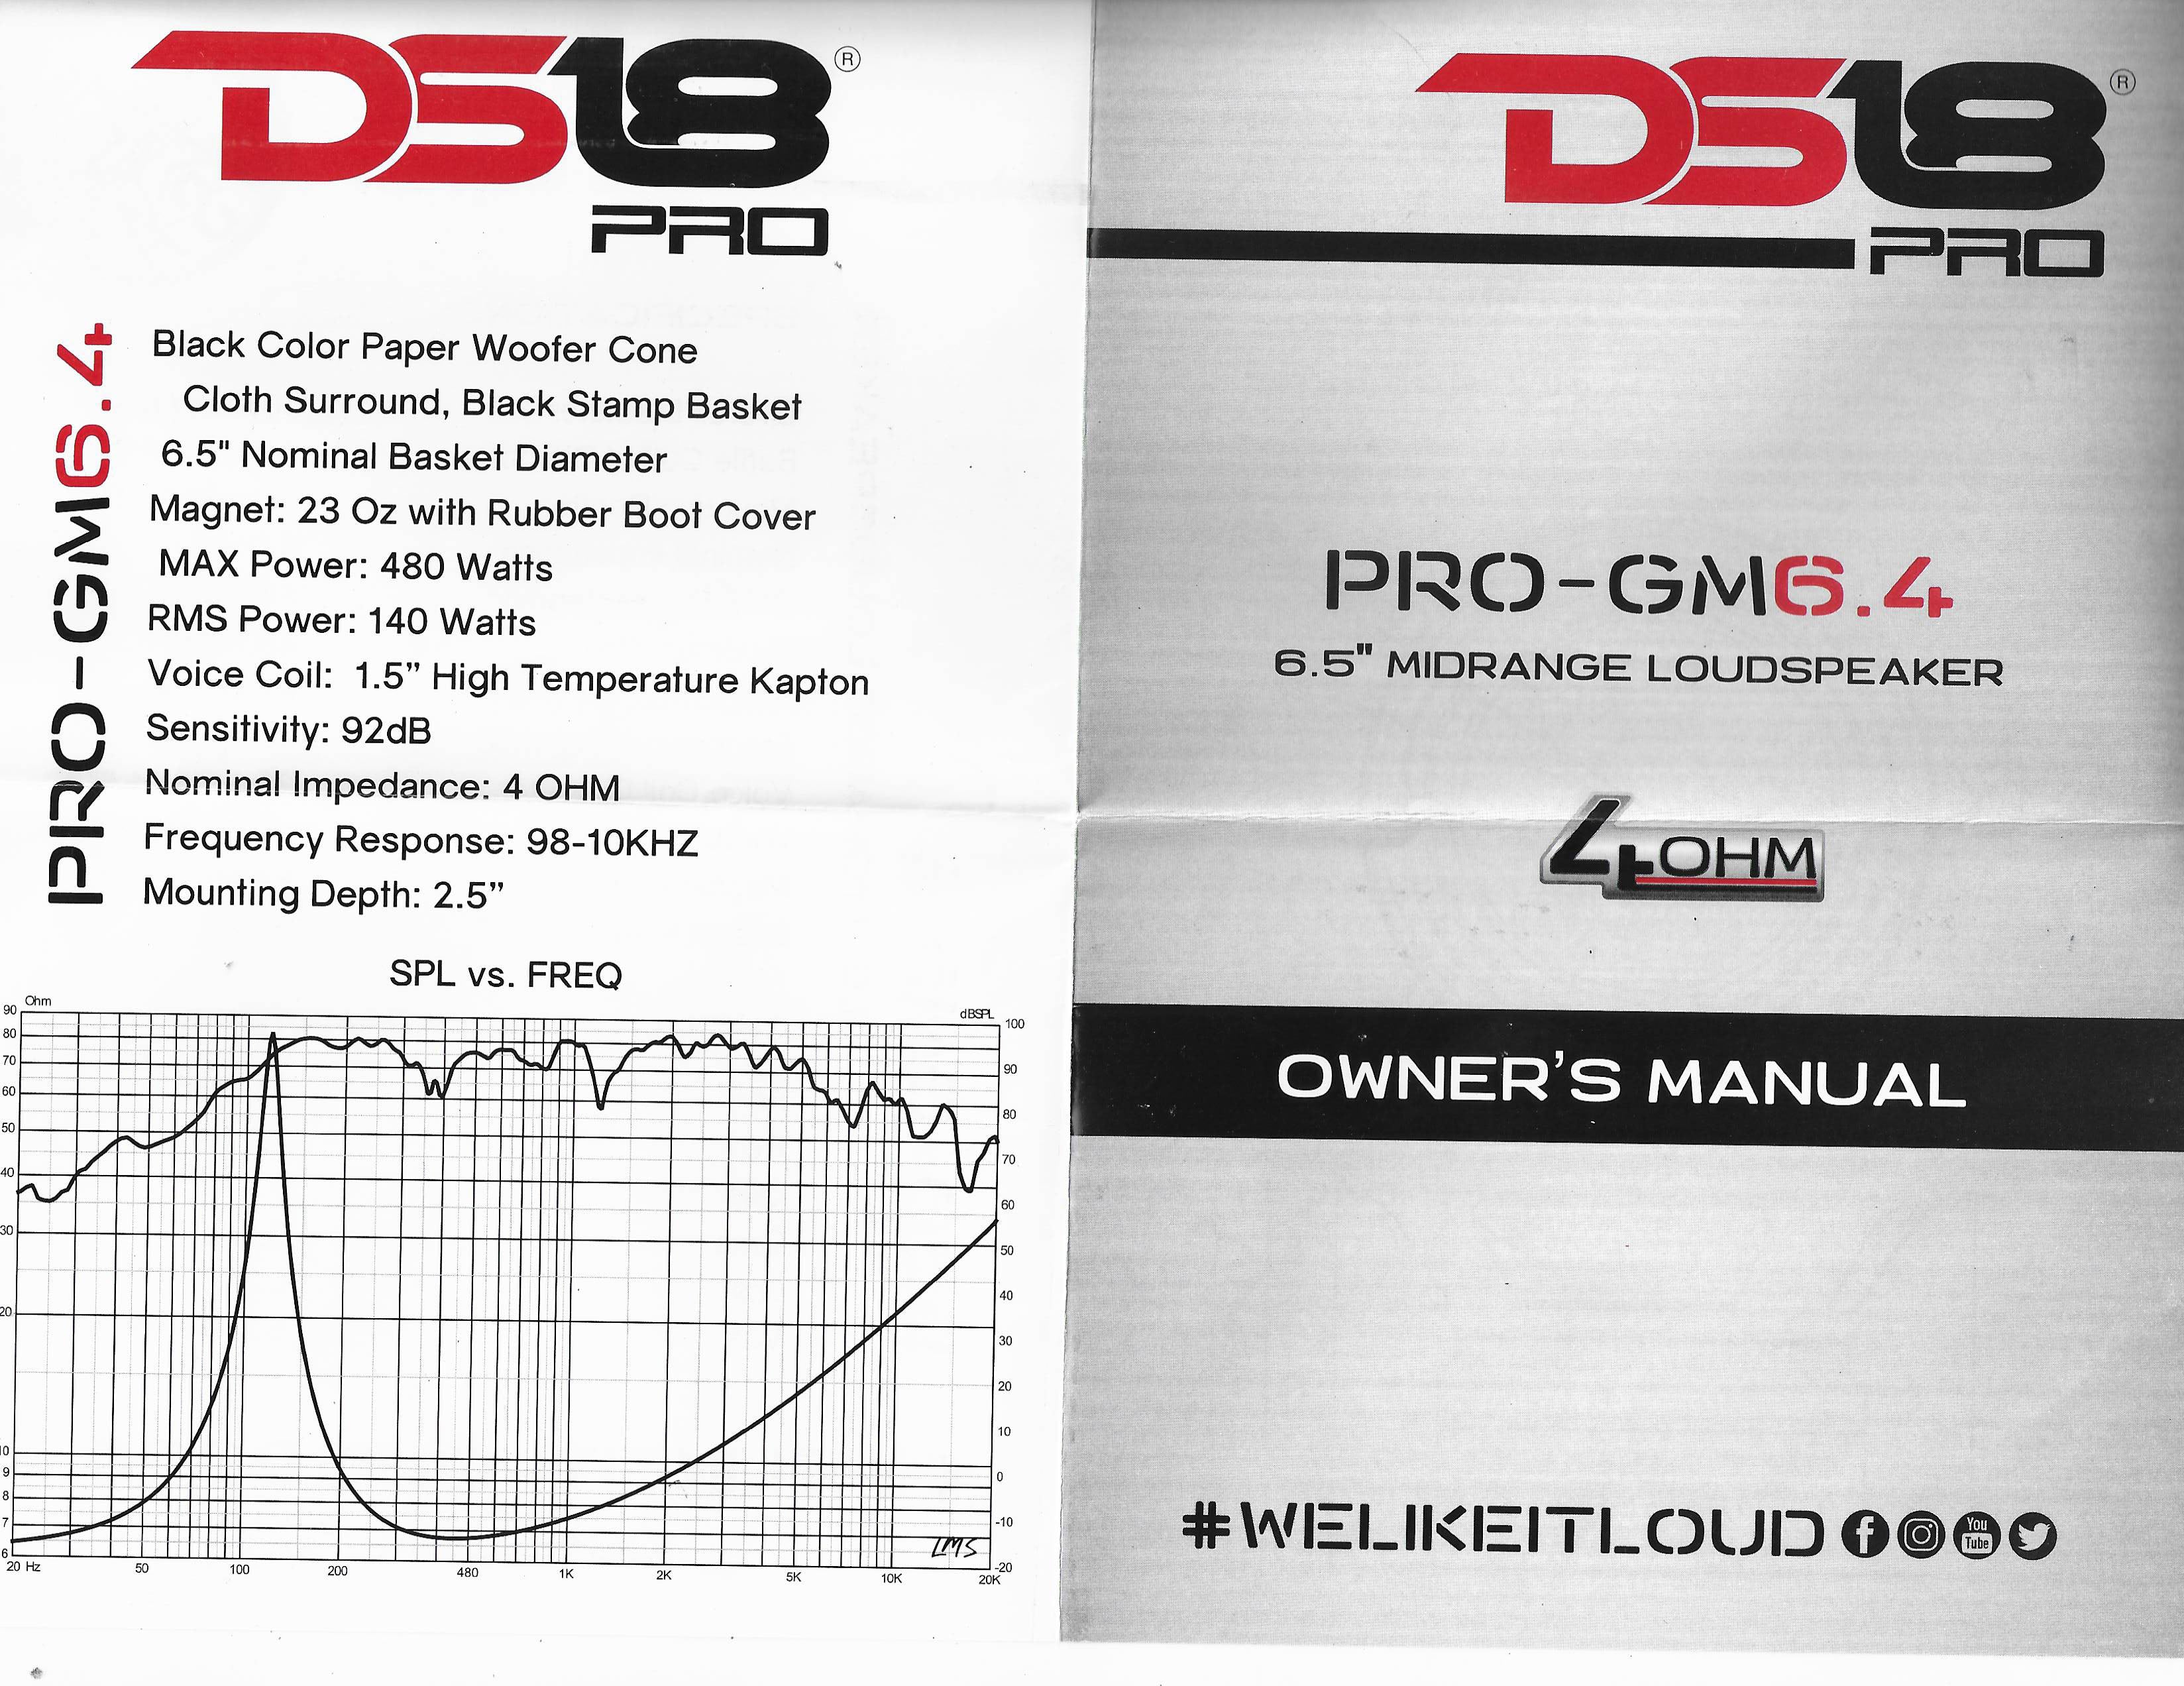 DS18 PRO-GM6.4 6.5" Midrange Loud Speaker 4 Ohm 480 Watts Max Mid Range Single